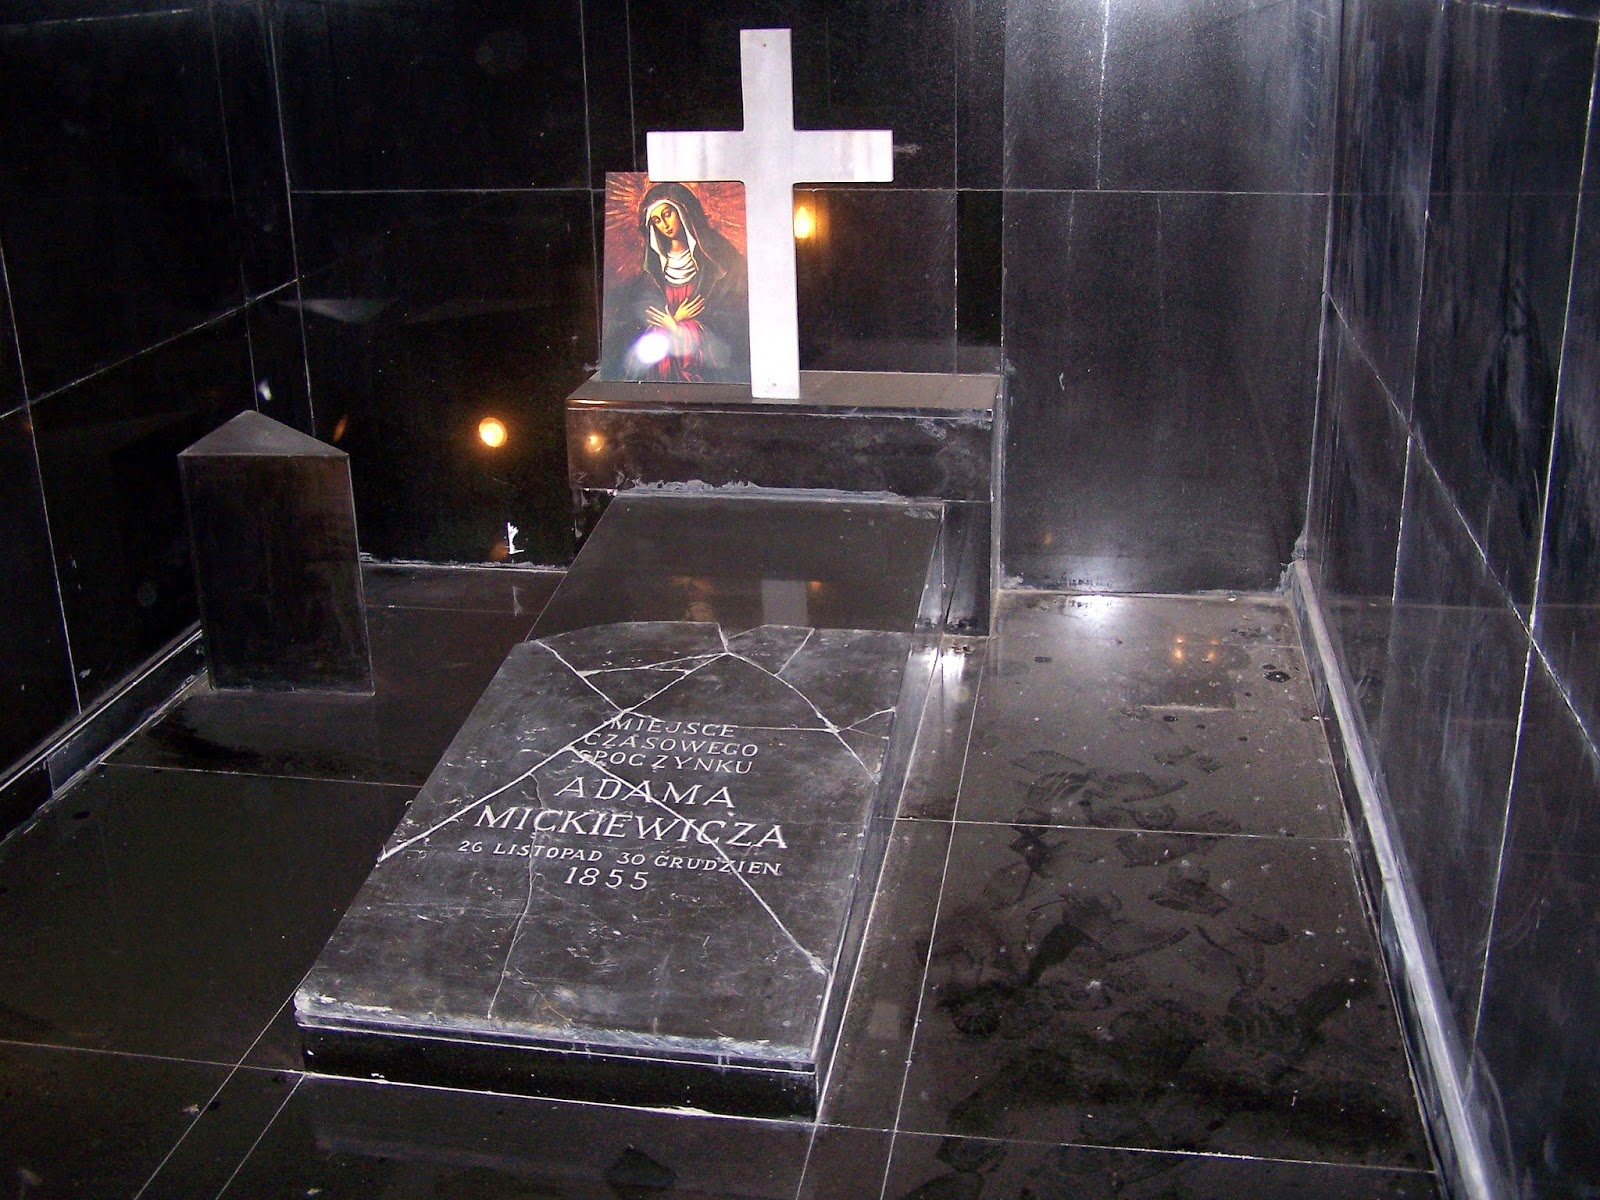 Adam Mickiewicz sembolik mezarı